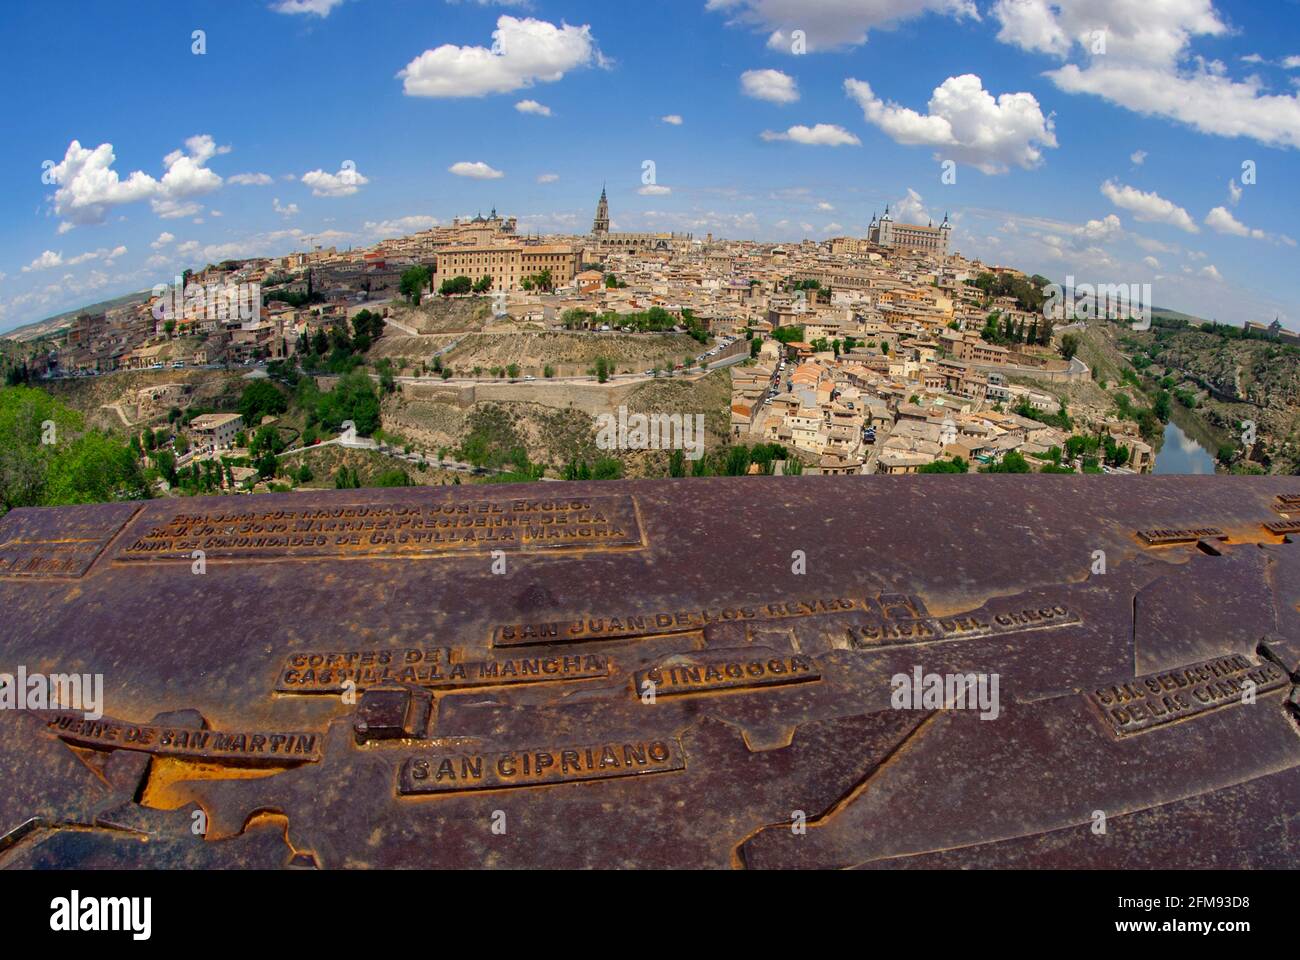 Plaque showing city landmarks, Toledo, Spain, Europe Stock Photo